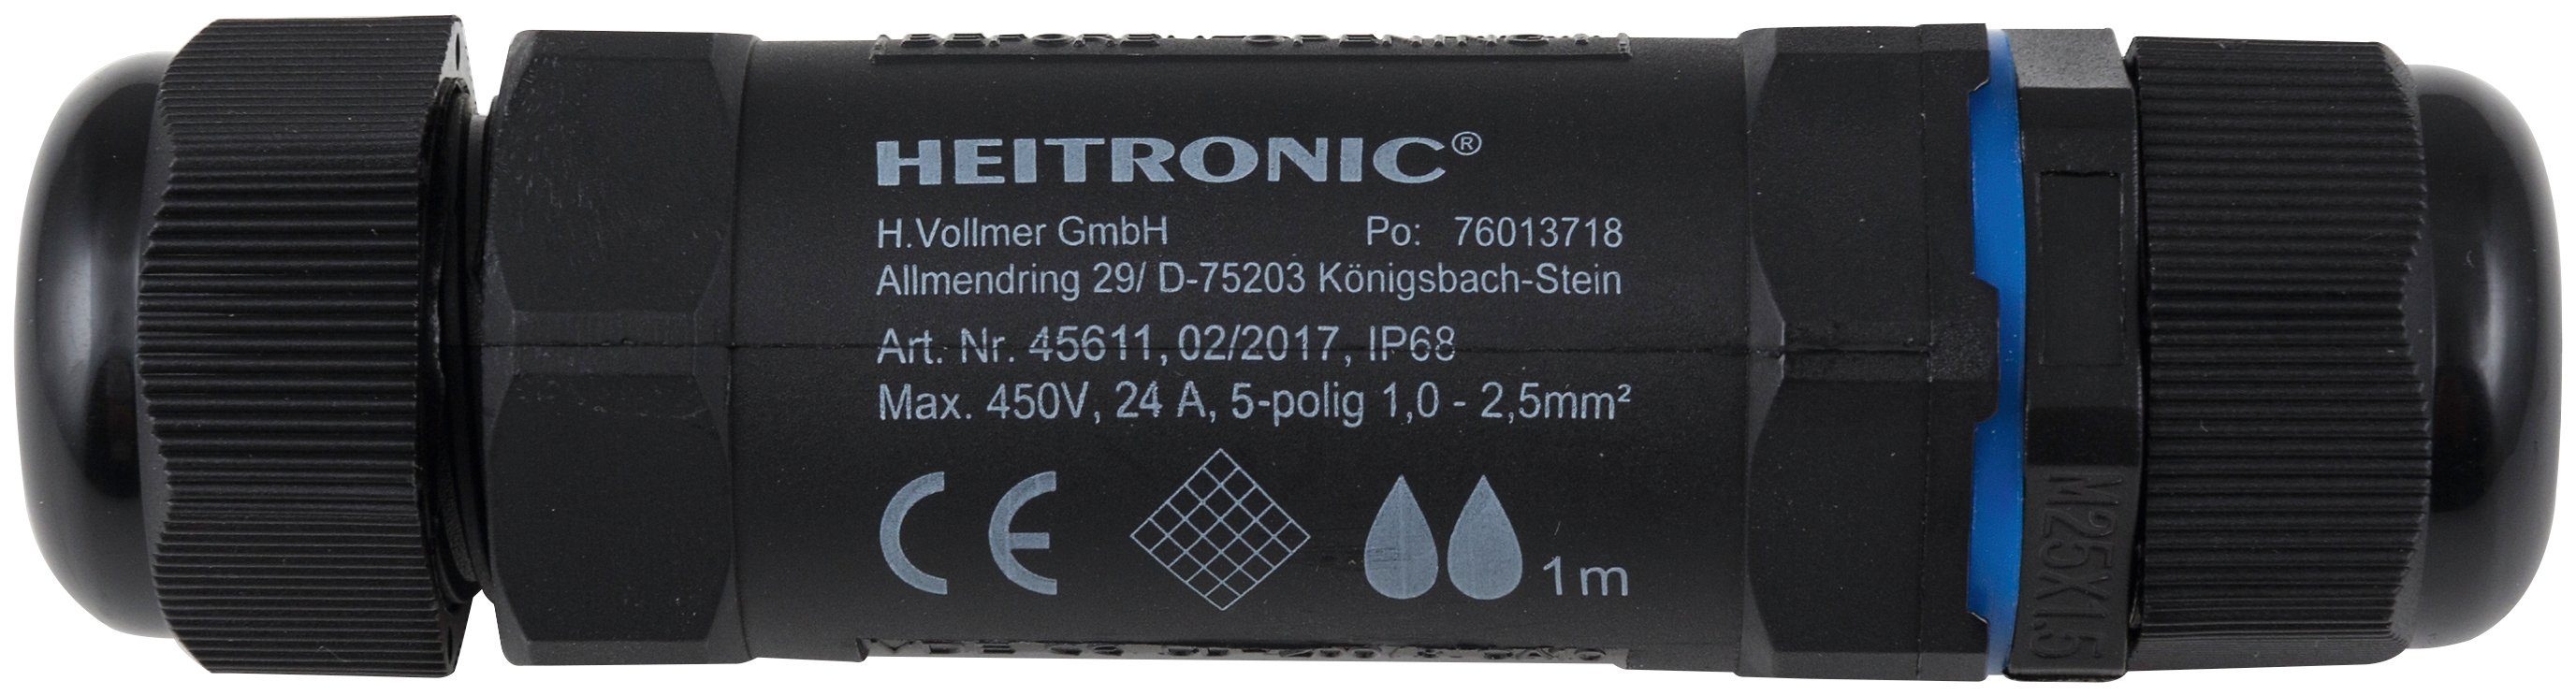 HEITRONIC Verbindungsmuffe 1 IP68, bis 5-polig Kabelmuffe wasserdicht 1-tlg., m Wassertiefe Kabel-Verbindungsstück